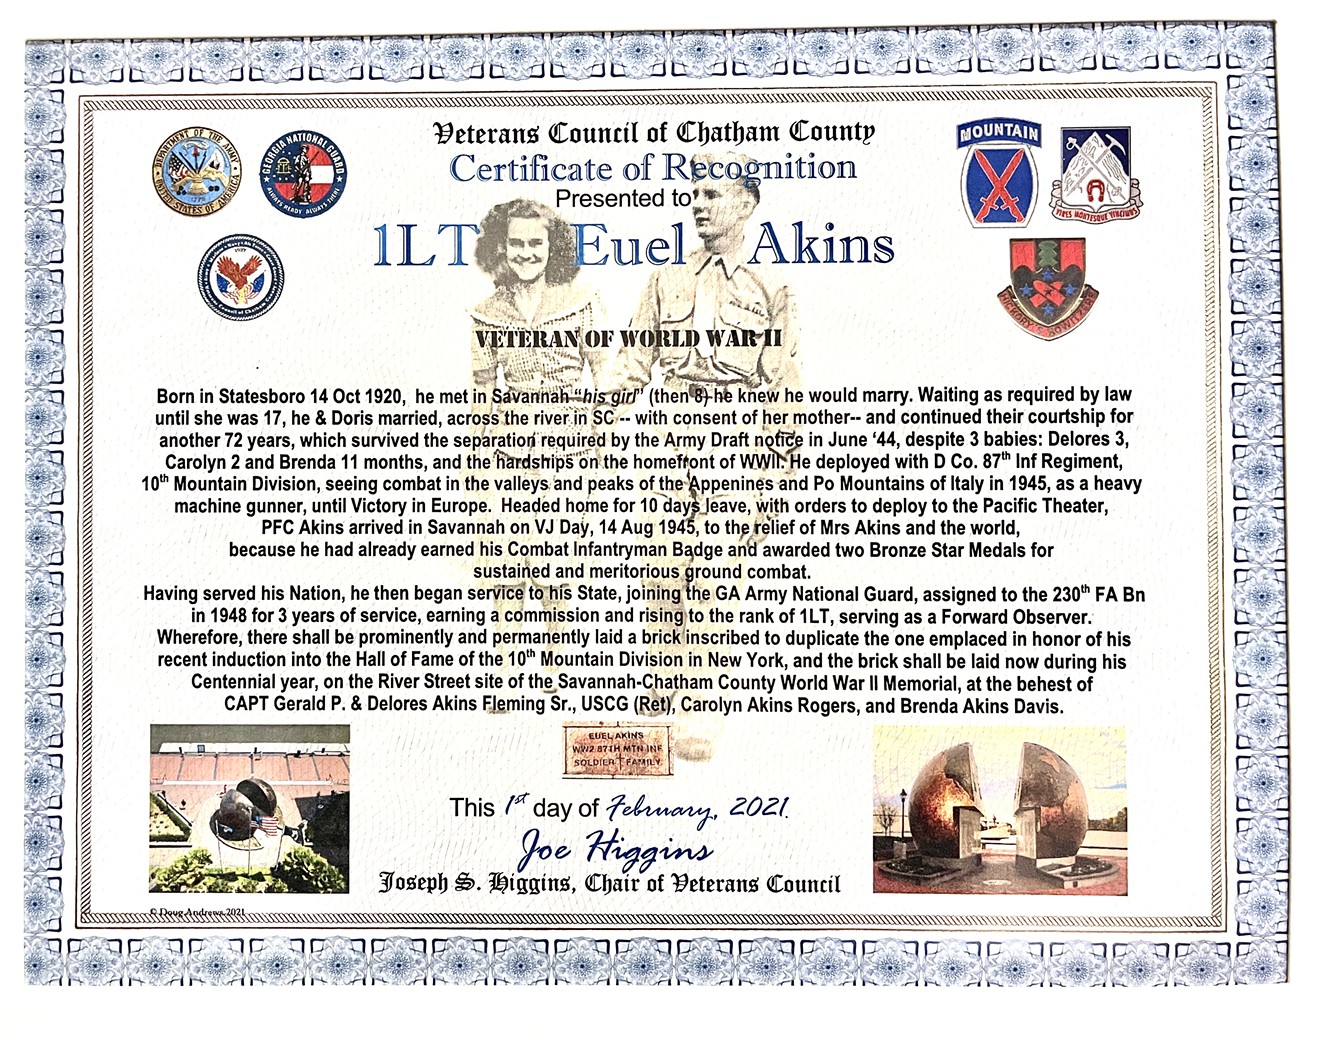 Veterans Council awards 10th Mountain Division Warrior HOF to 1LT Euel Akin